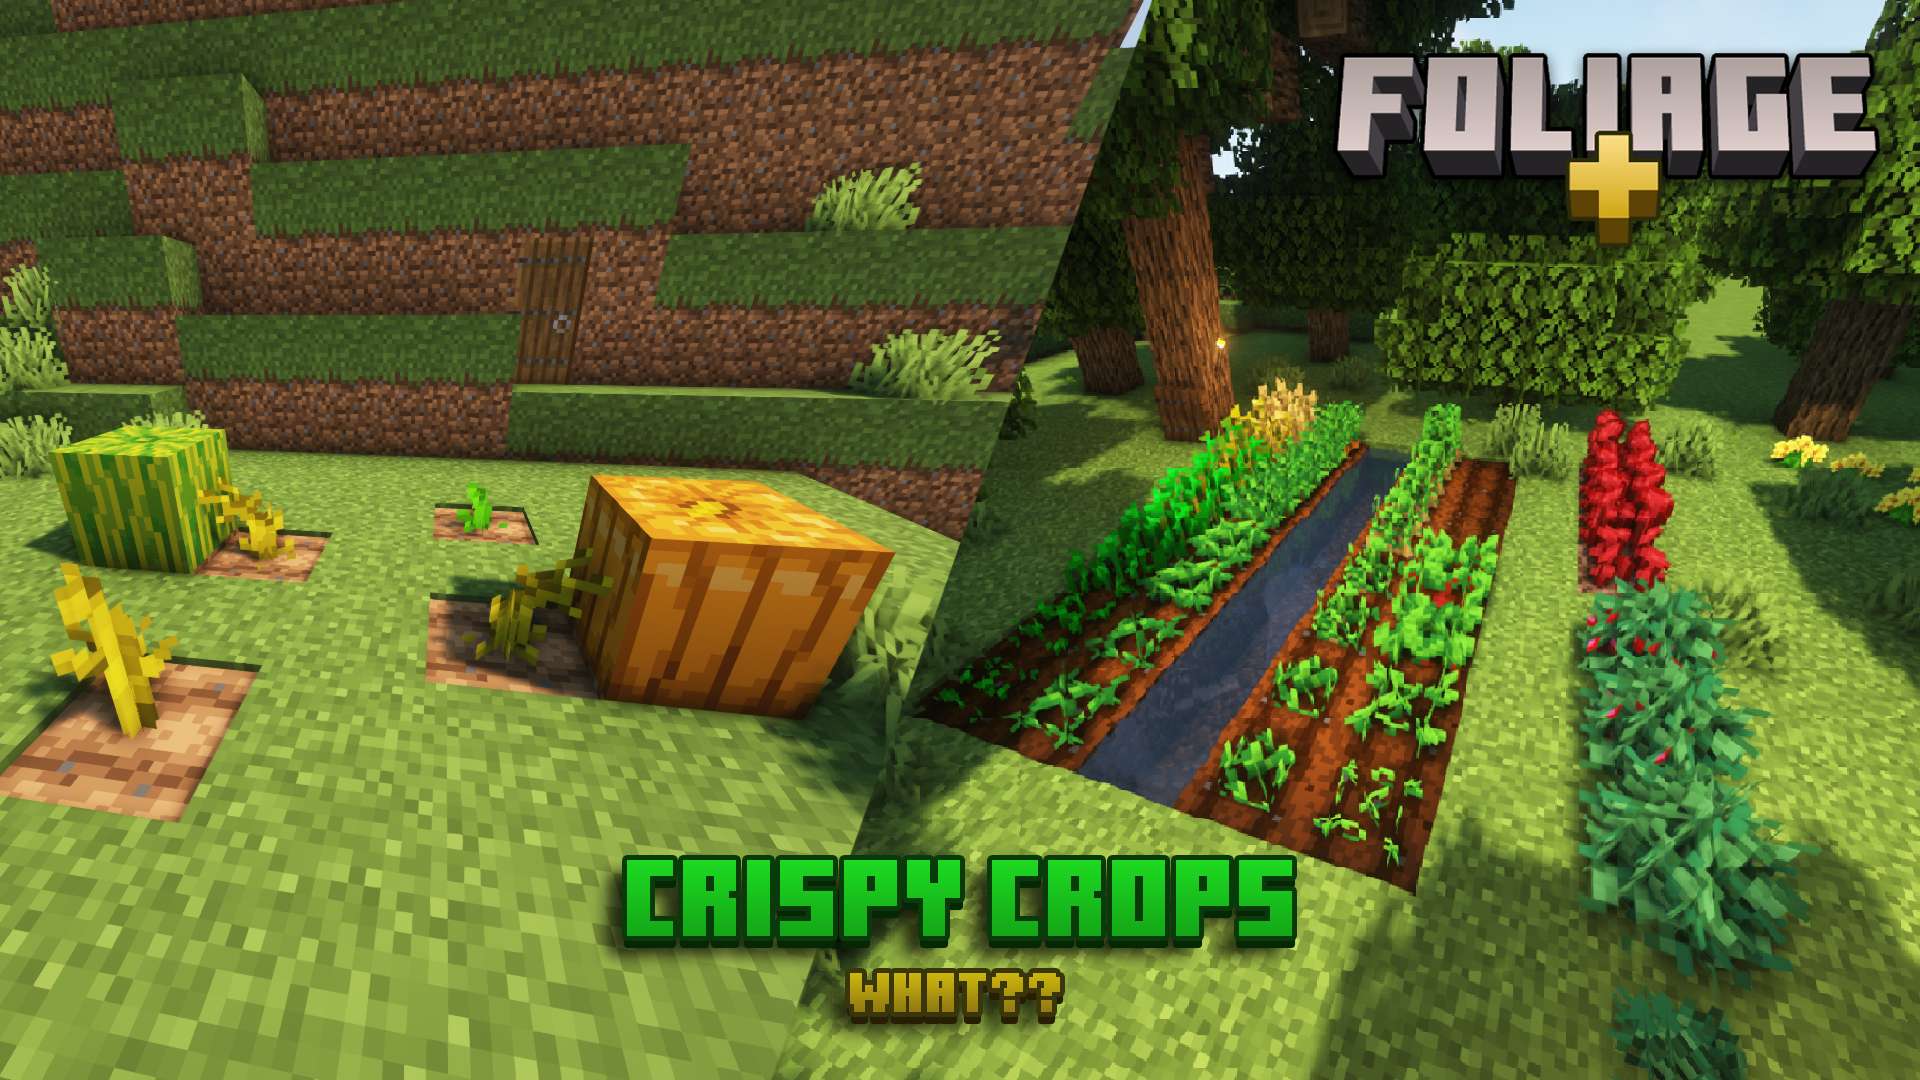 Crispy Crops